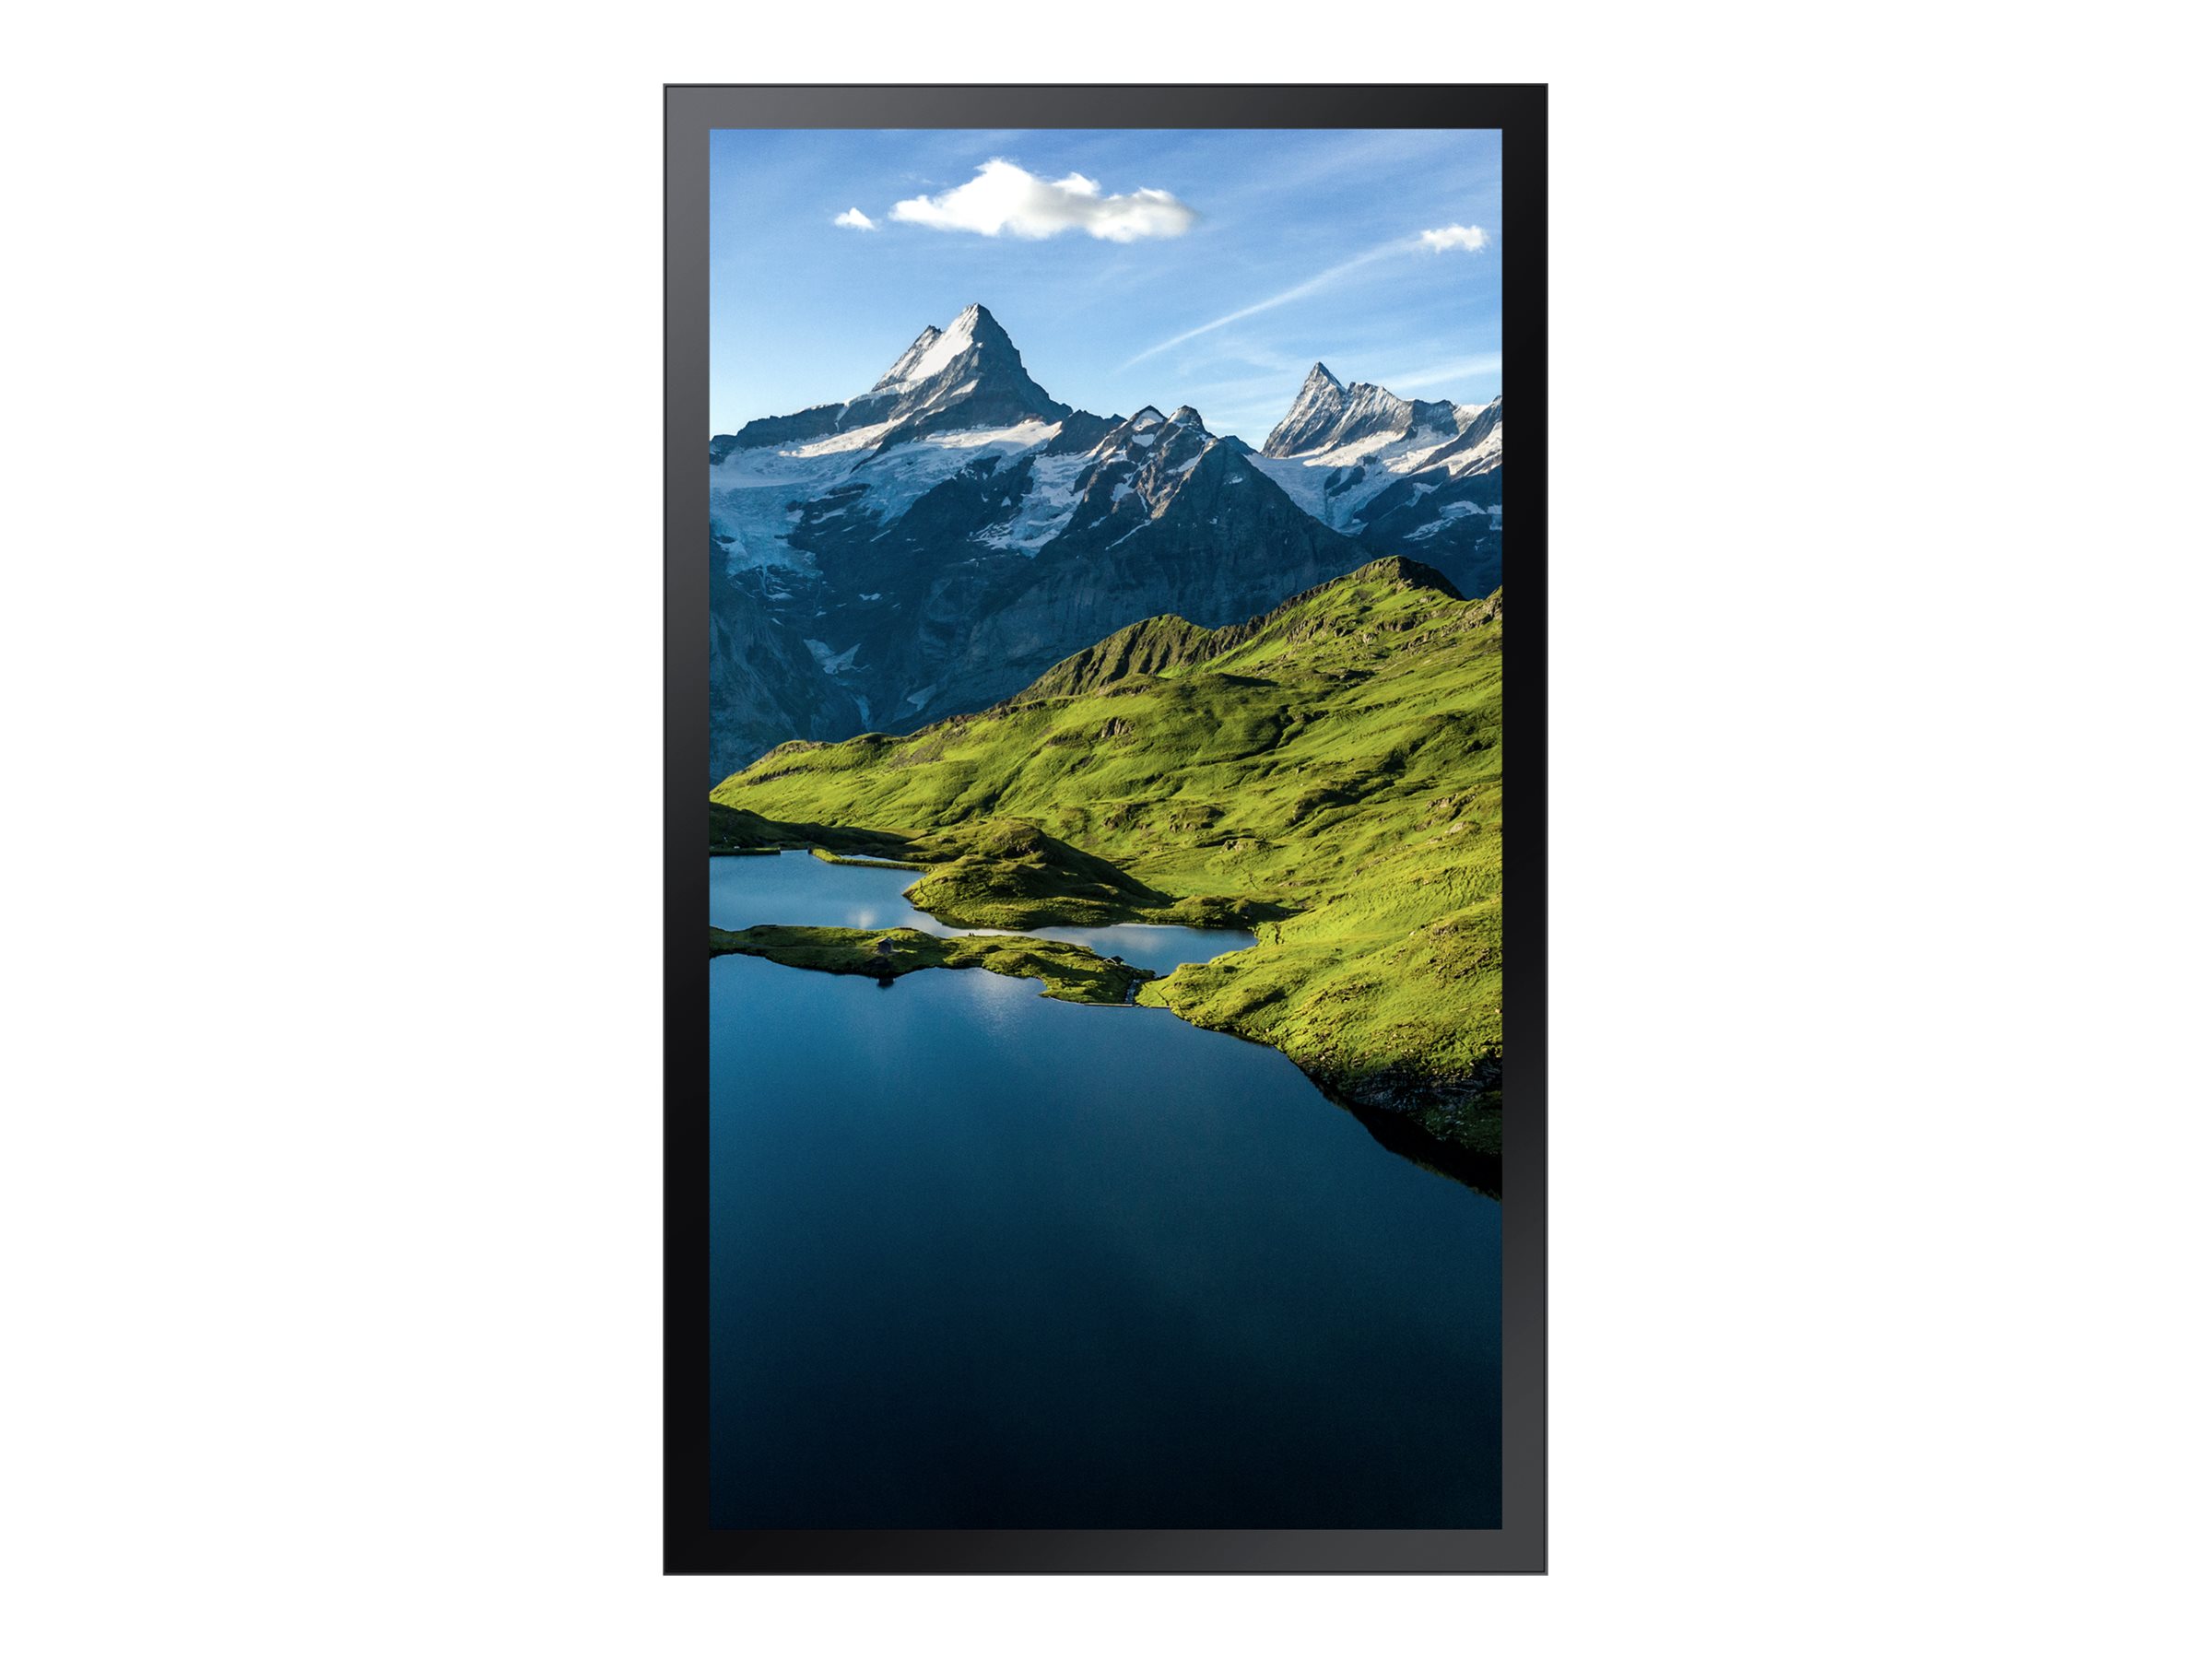 Komplettset Samsung OH75A | 75" (190cm) | UHD Outdoor Display inkl. Stele (Portrait)